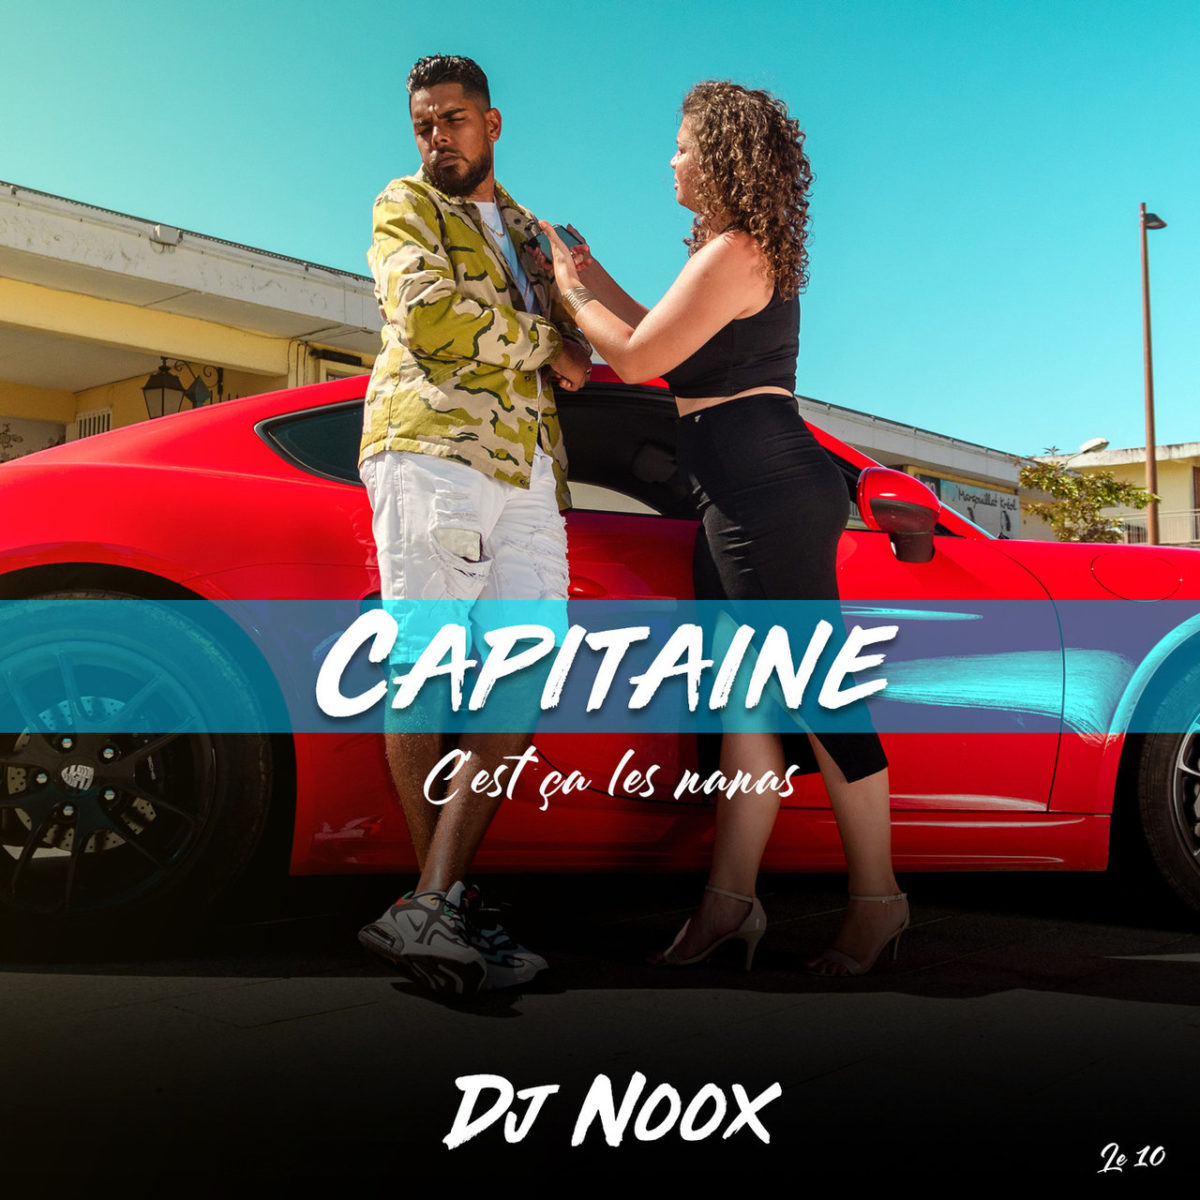 Capitaine - C'est Ça Les Nanas (ft. DJ Noox) (Cover)